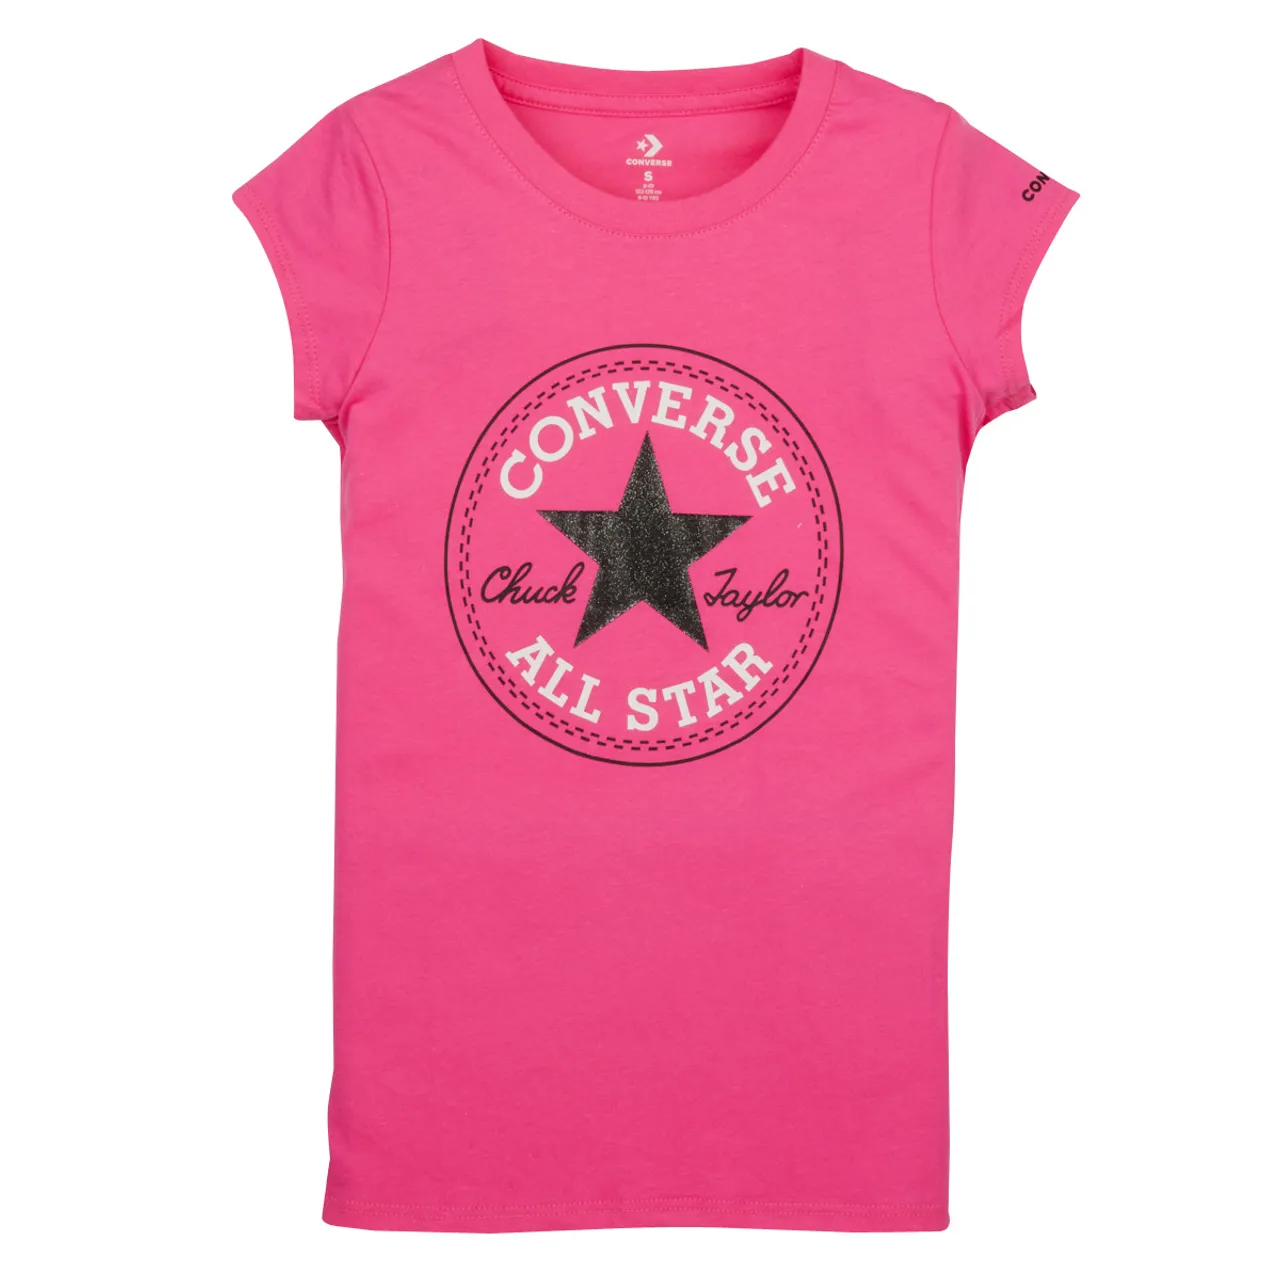 Converse  CHUCK PATCH TEE  girls's Children's T shirt in Pink